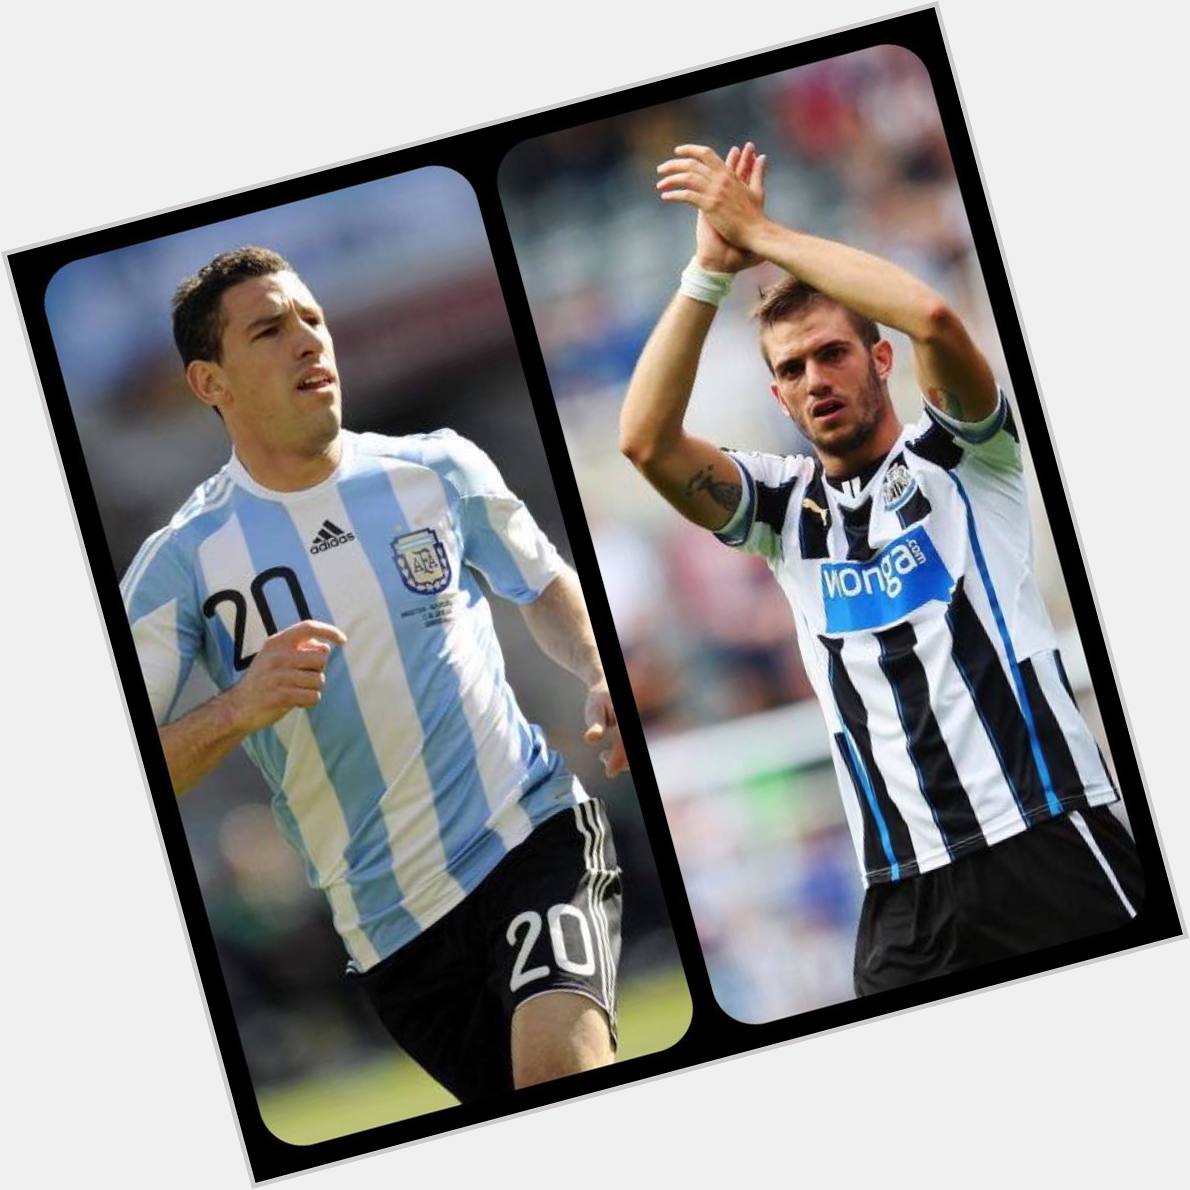 HAPPY BIRTHDAY! To Argentina midfielder Maxi Rodriguez and Newcastle United defender Davide Santon! 